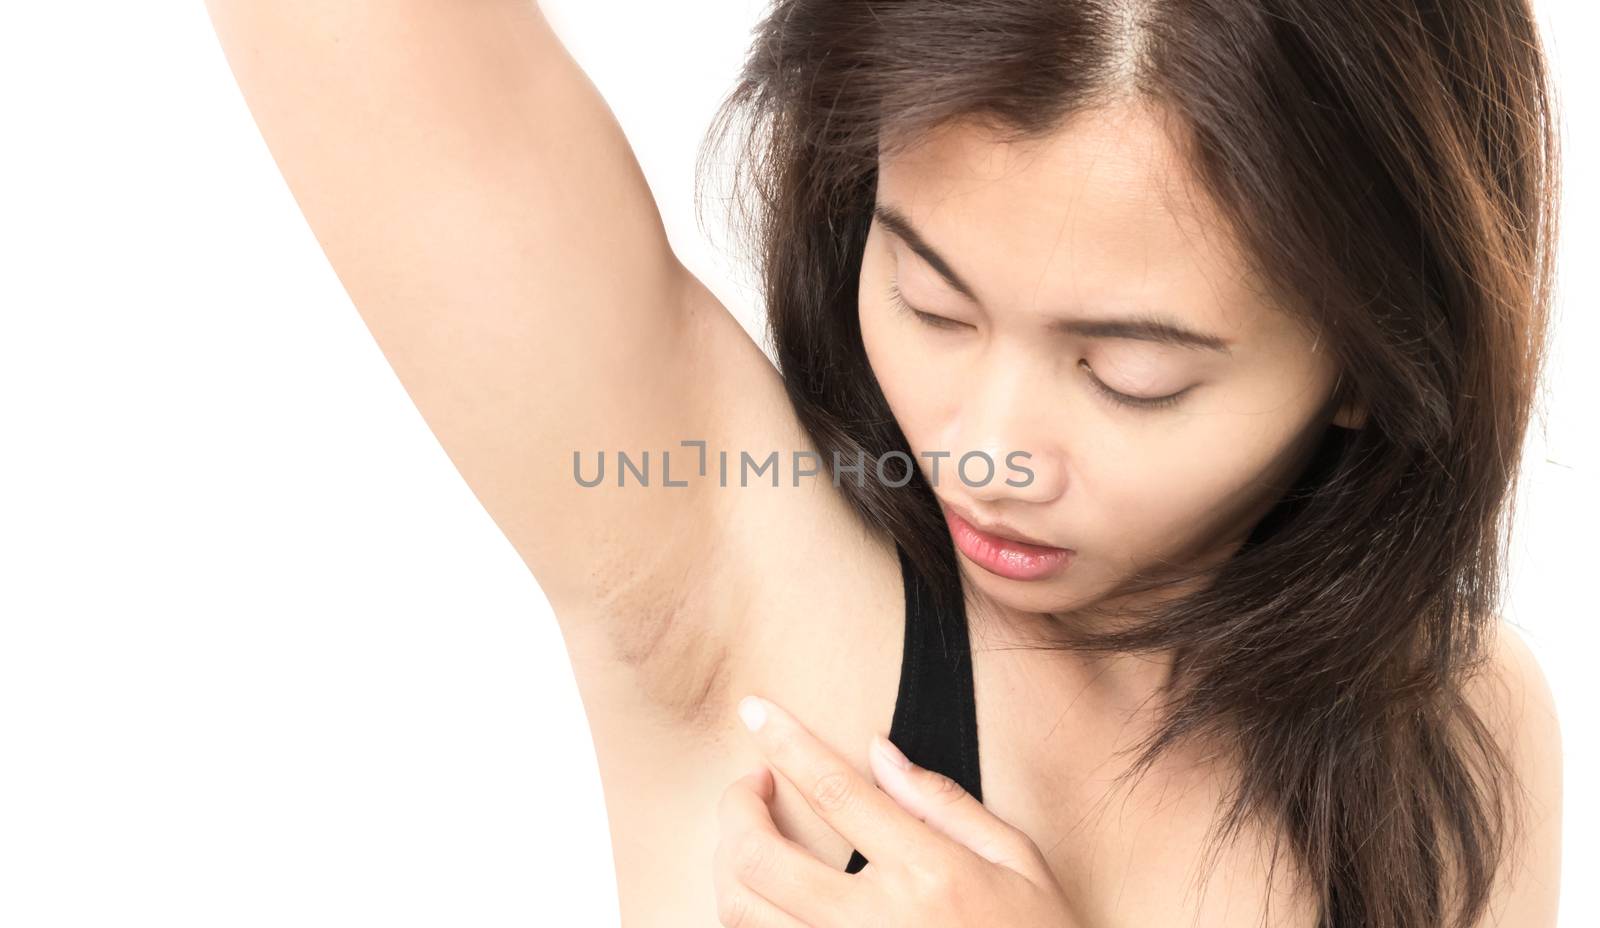 Women problem black armpit on white background for skin care and by pt.pongsak@gmail.com